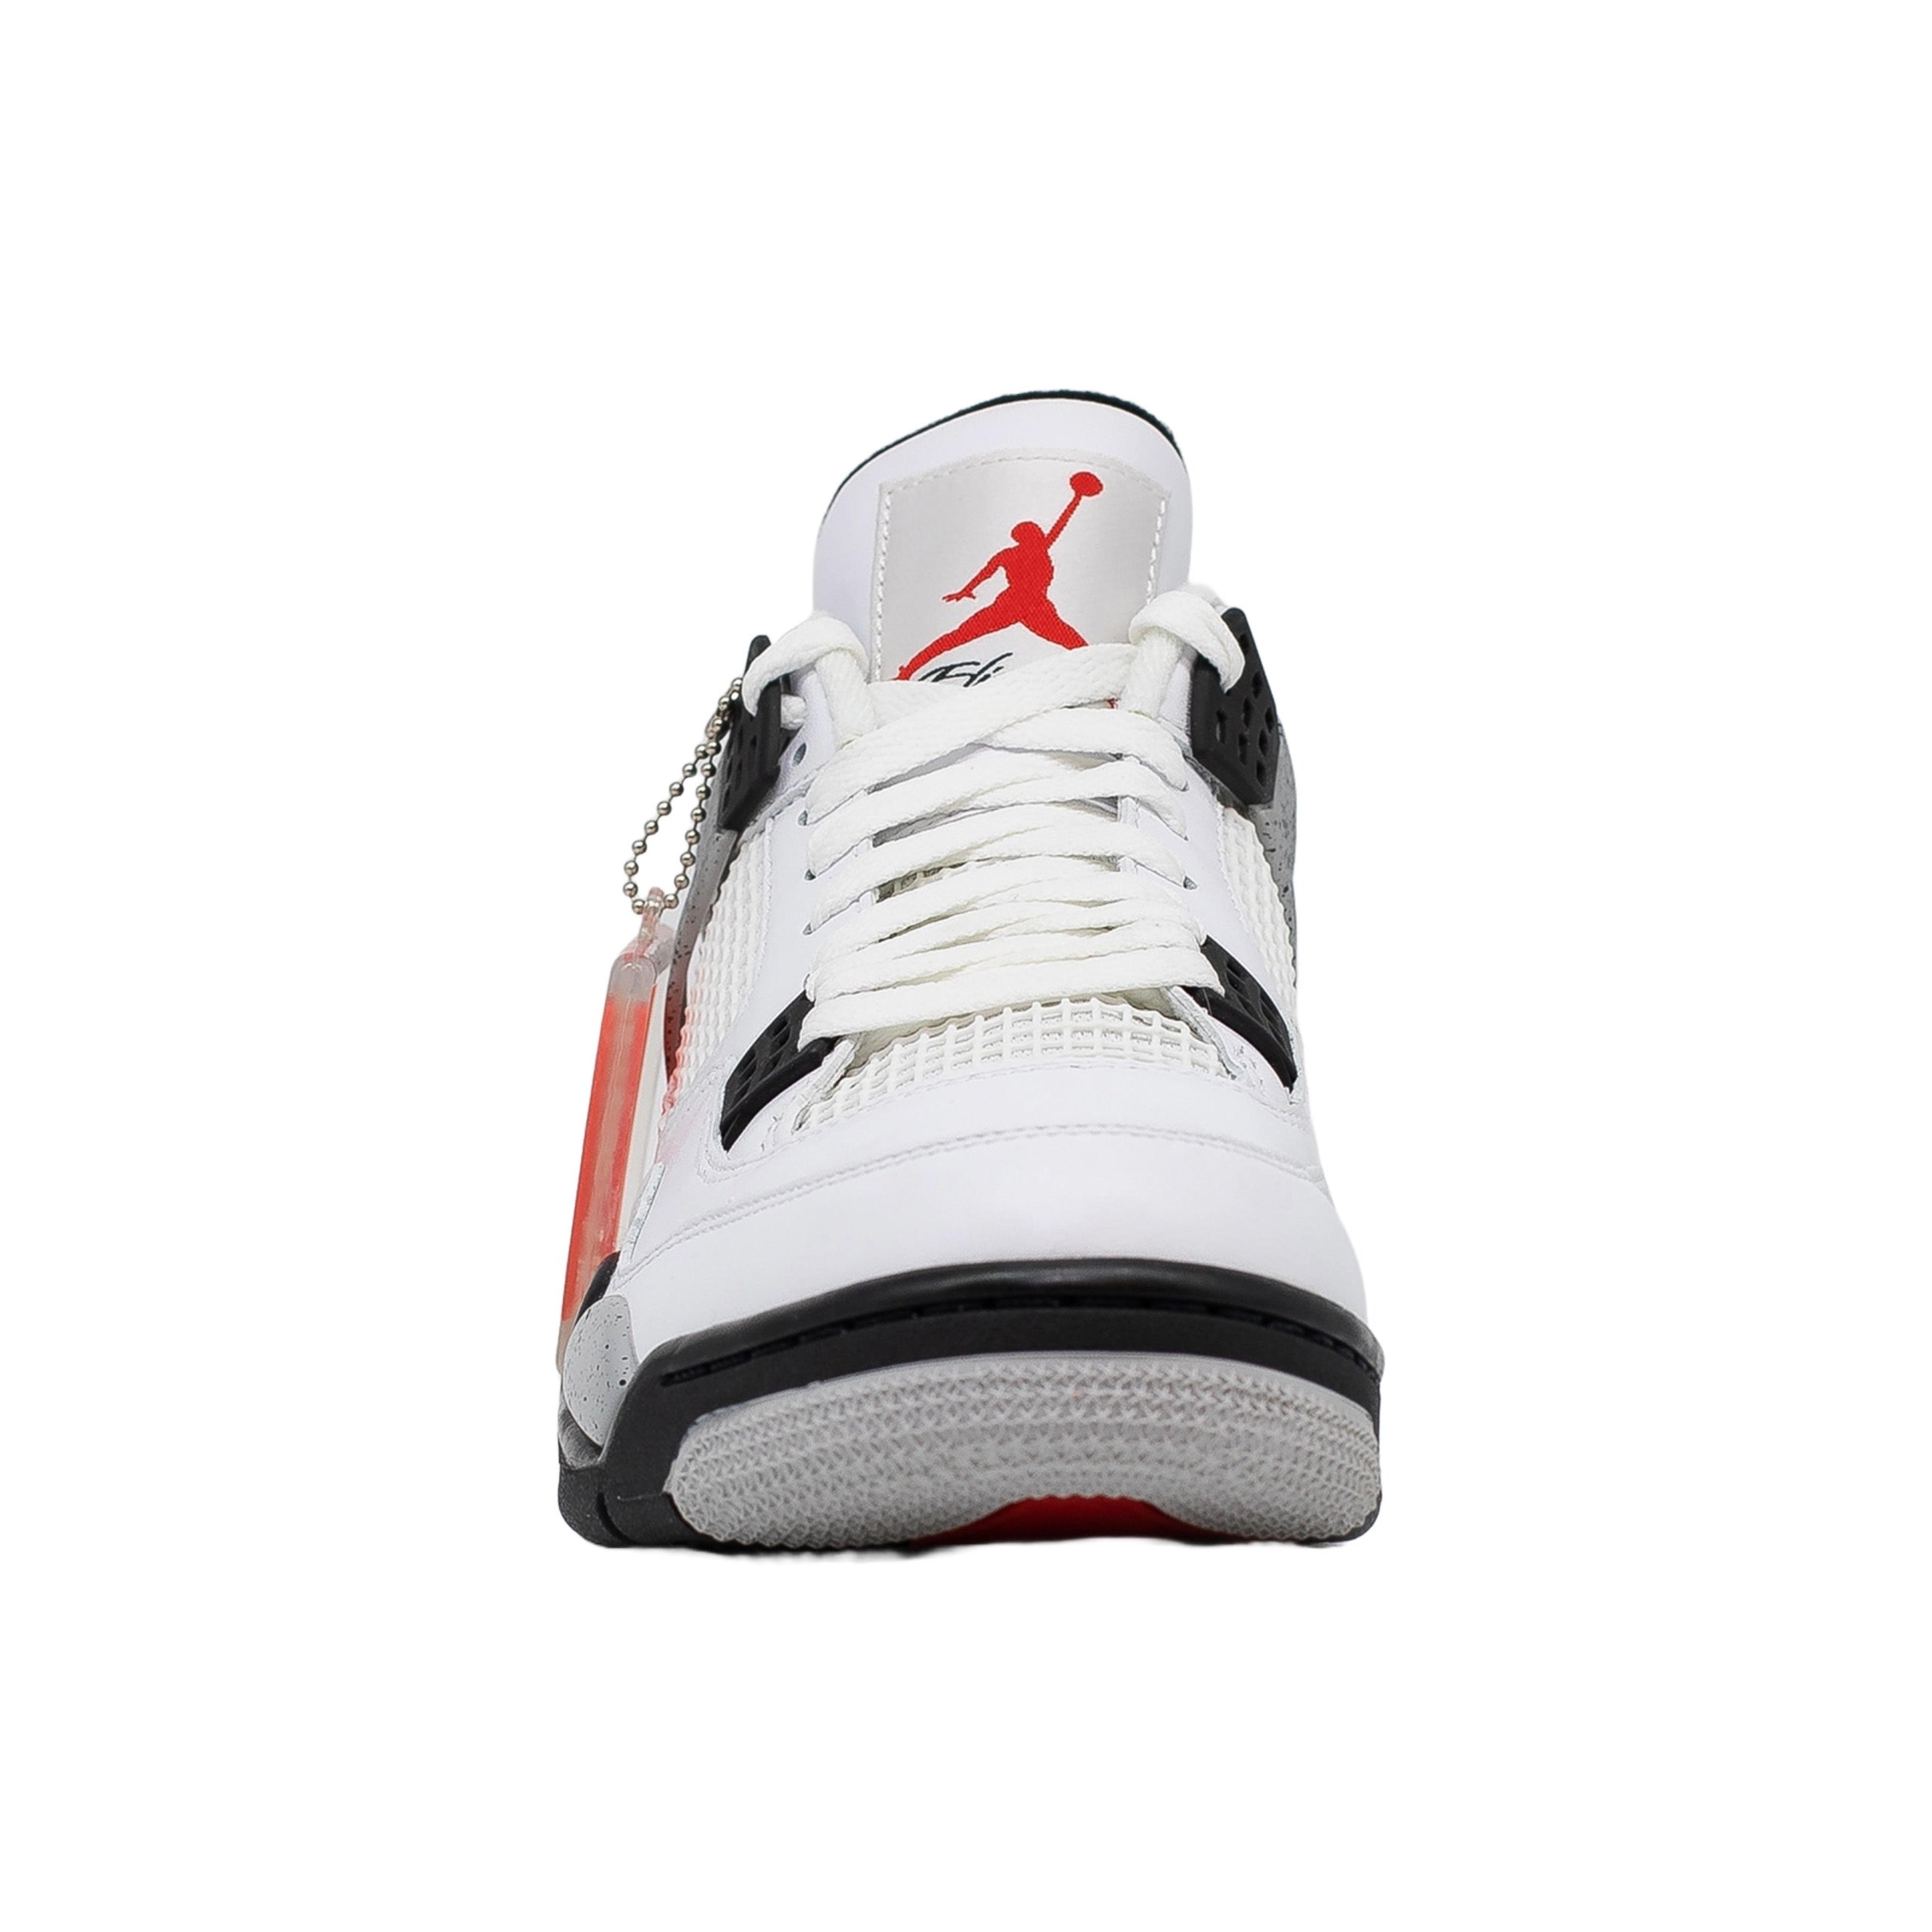 Alternate View 3 of Air Jordan 4, White Cement (2016)